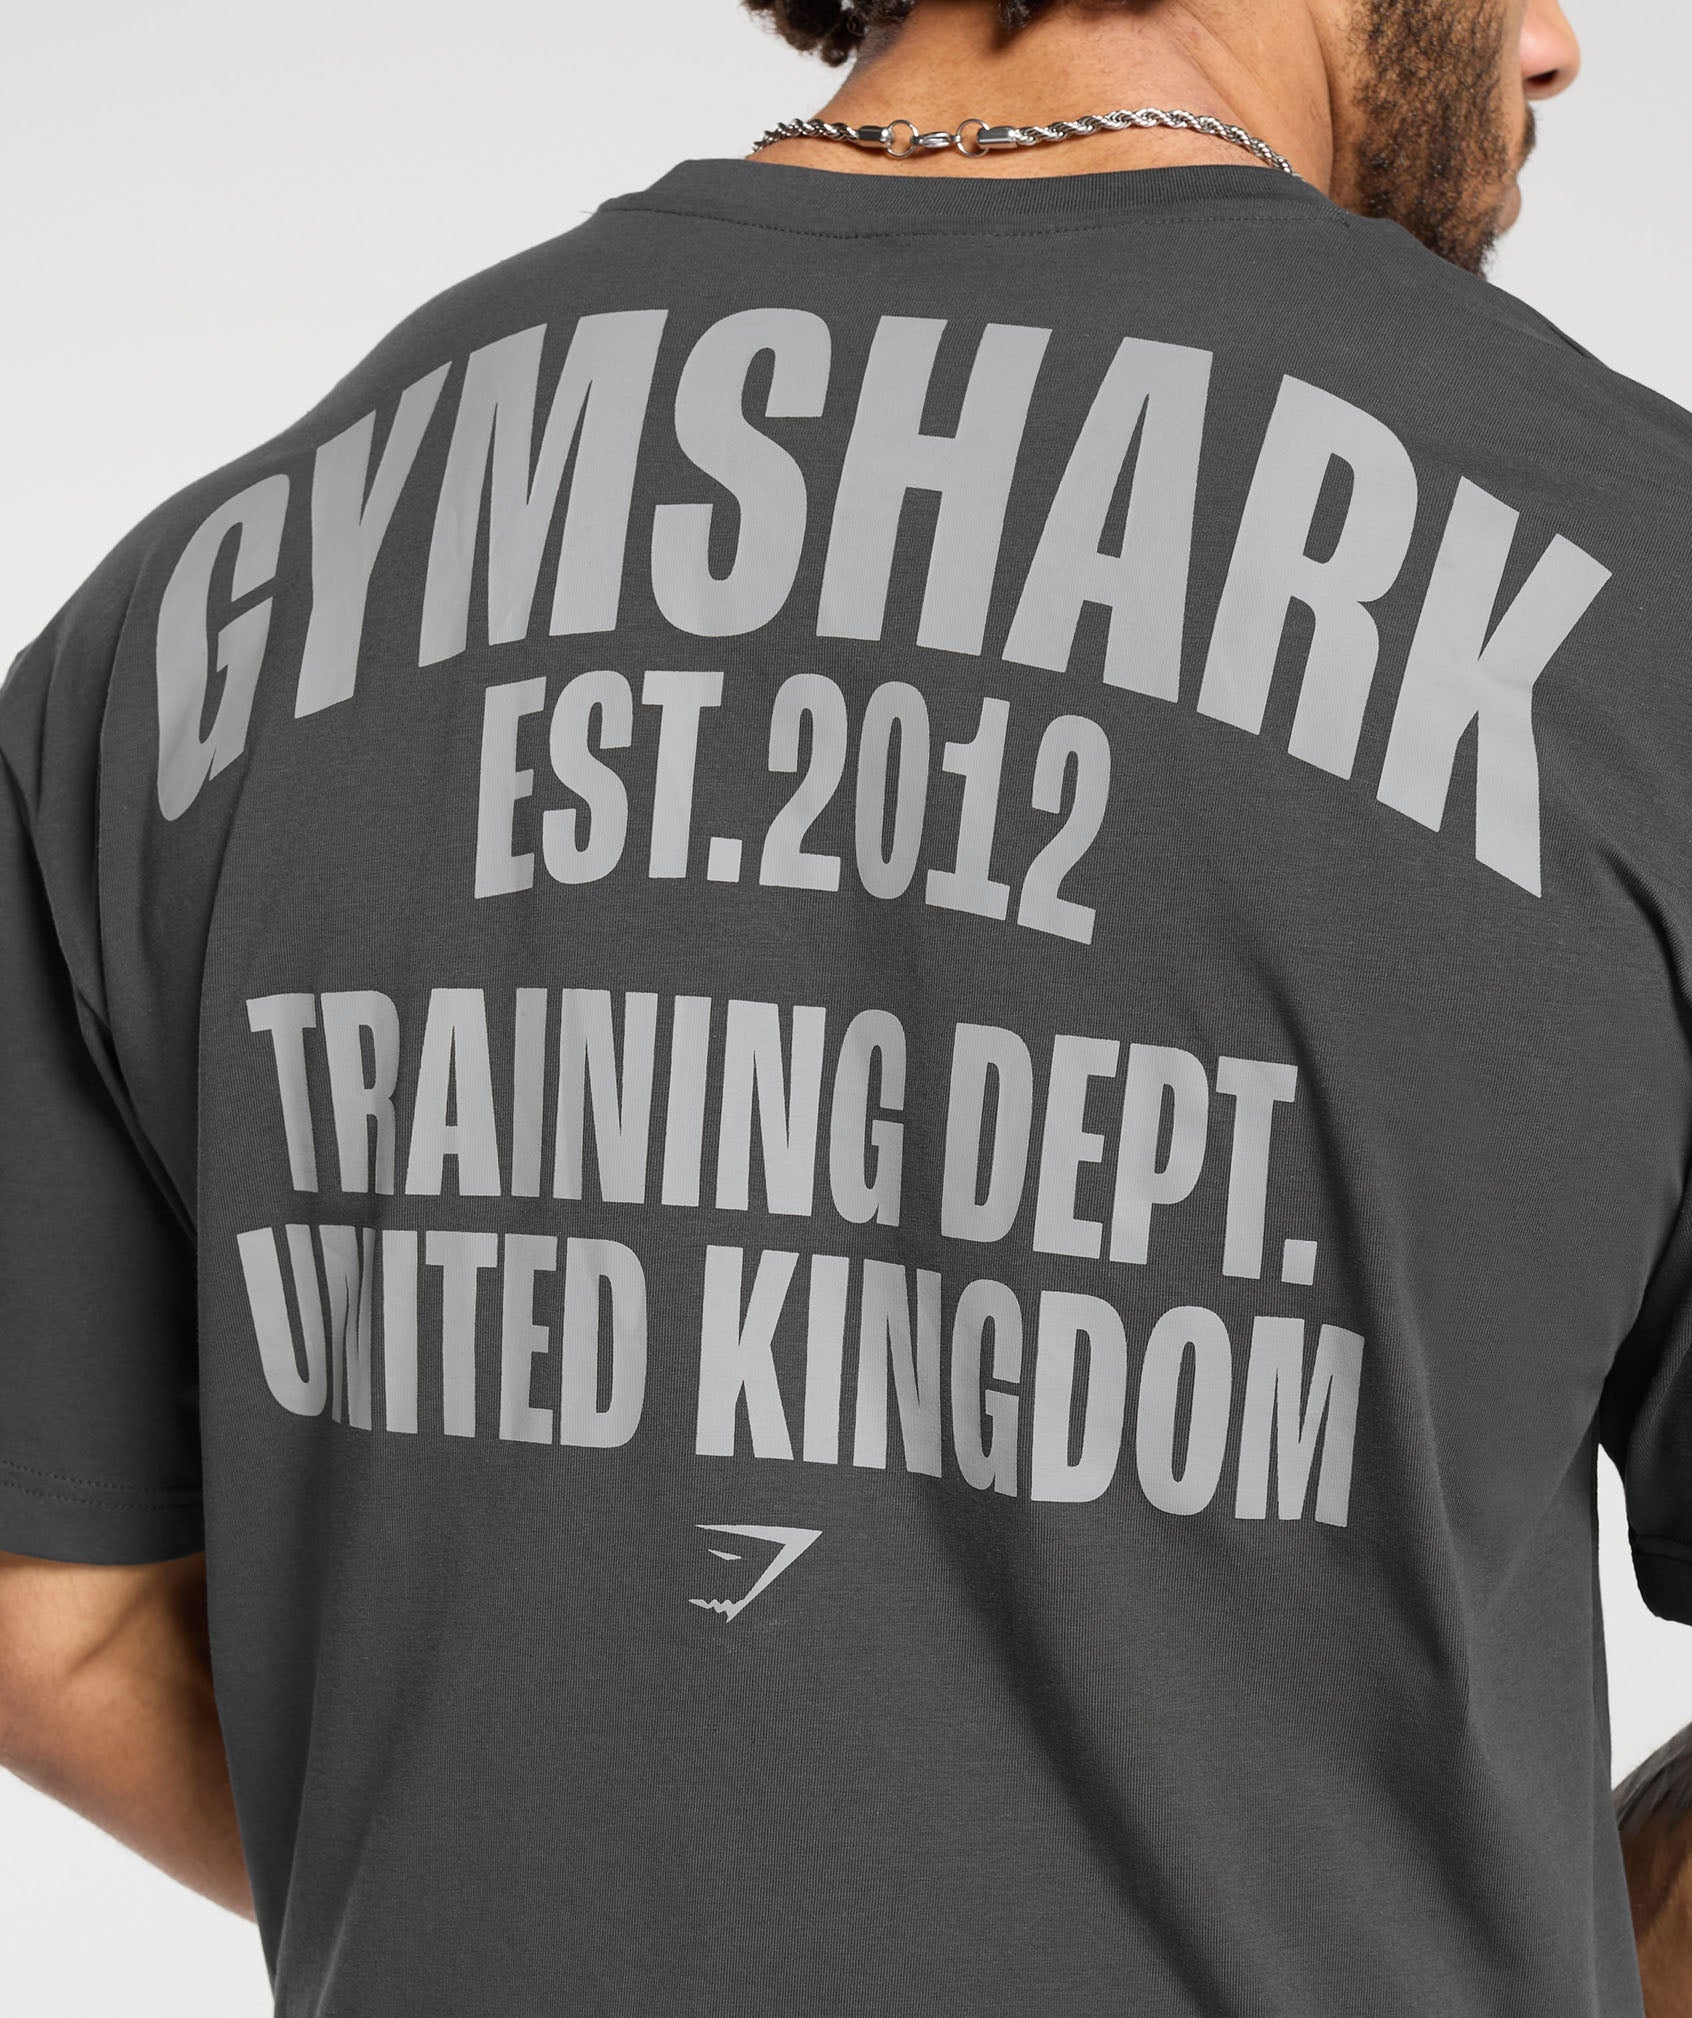 Training Dept. UK T-Shirt in Asphalt Grey - view 6